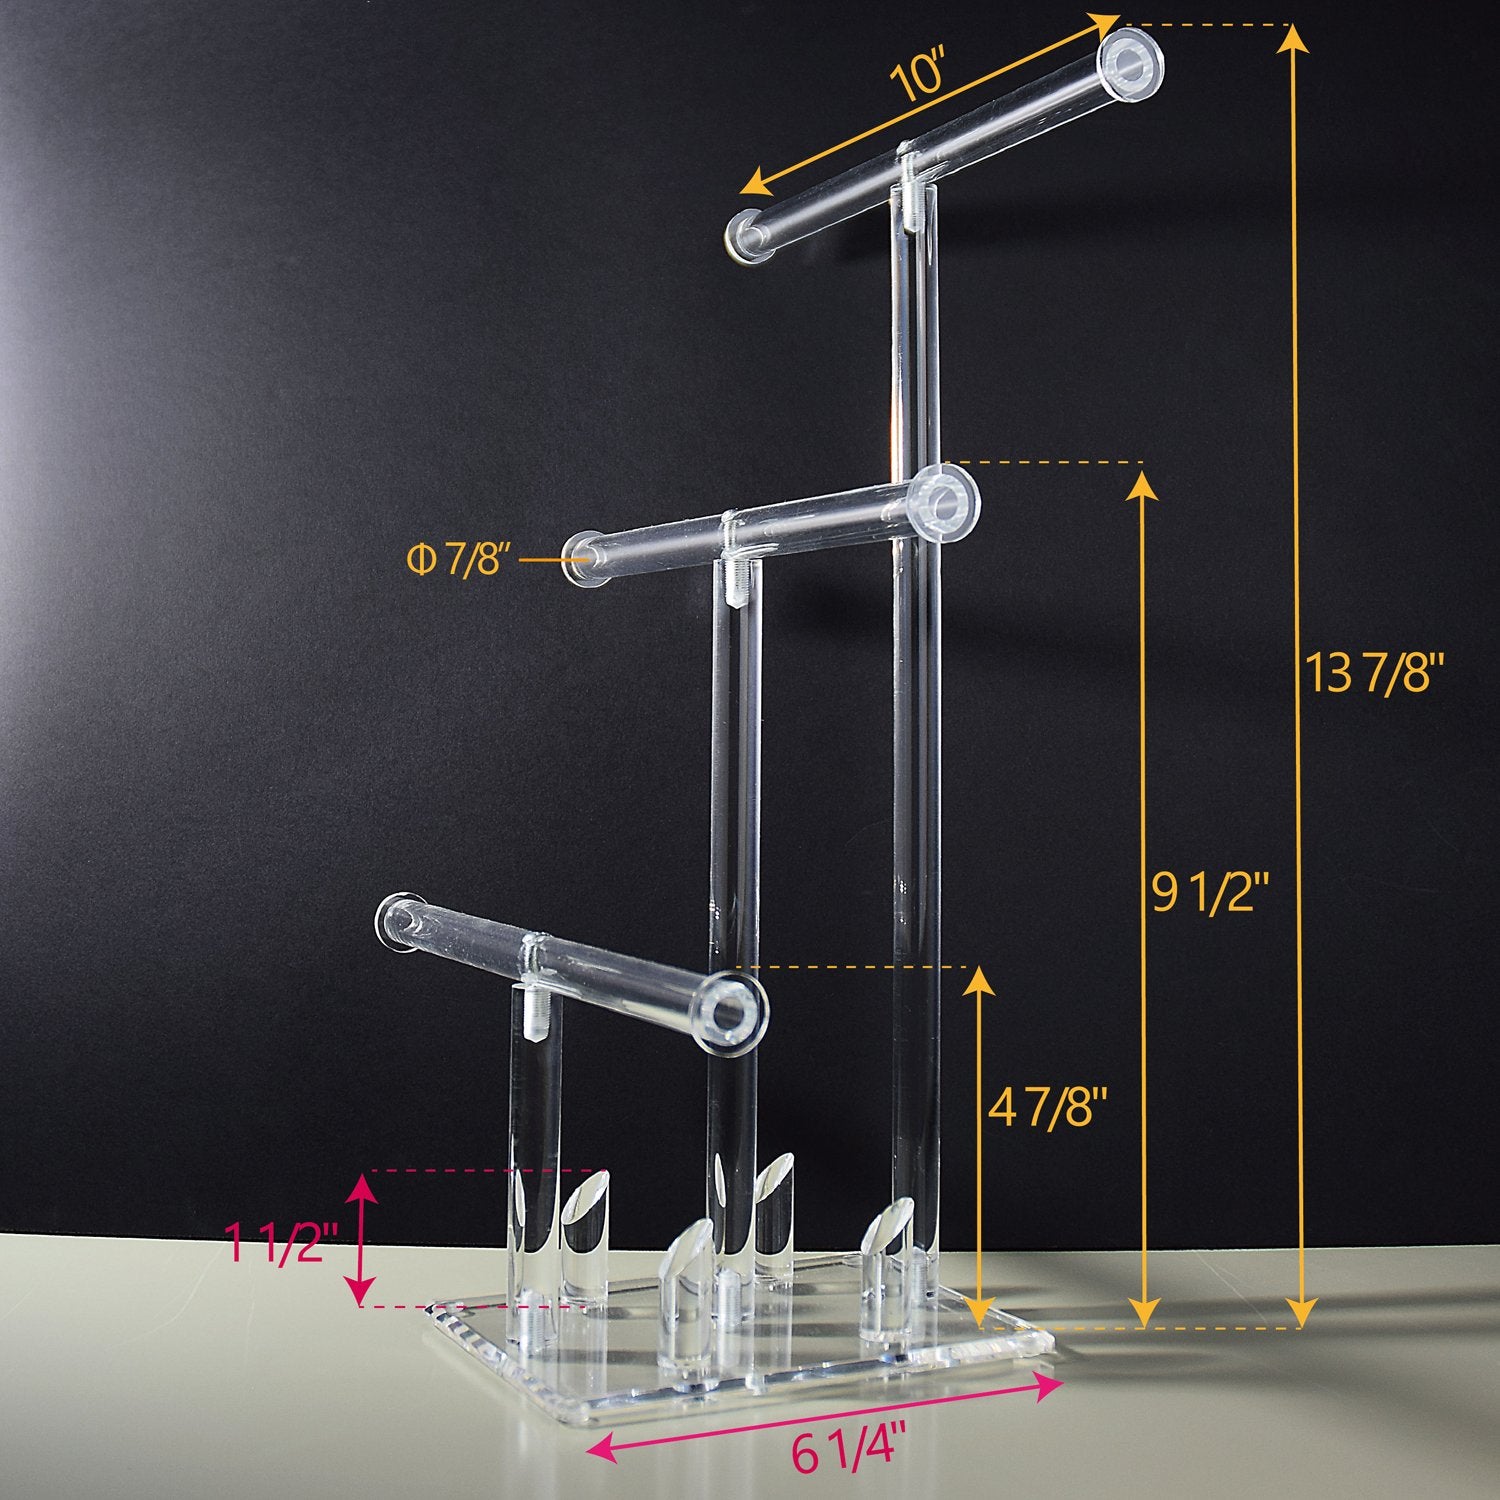 Ikee Design® Acrylic 3-Tiered Jewelry Storage Drawer